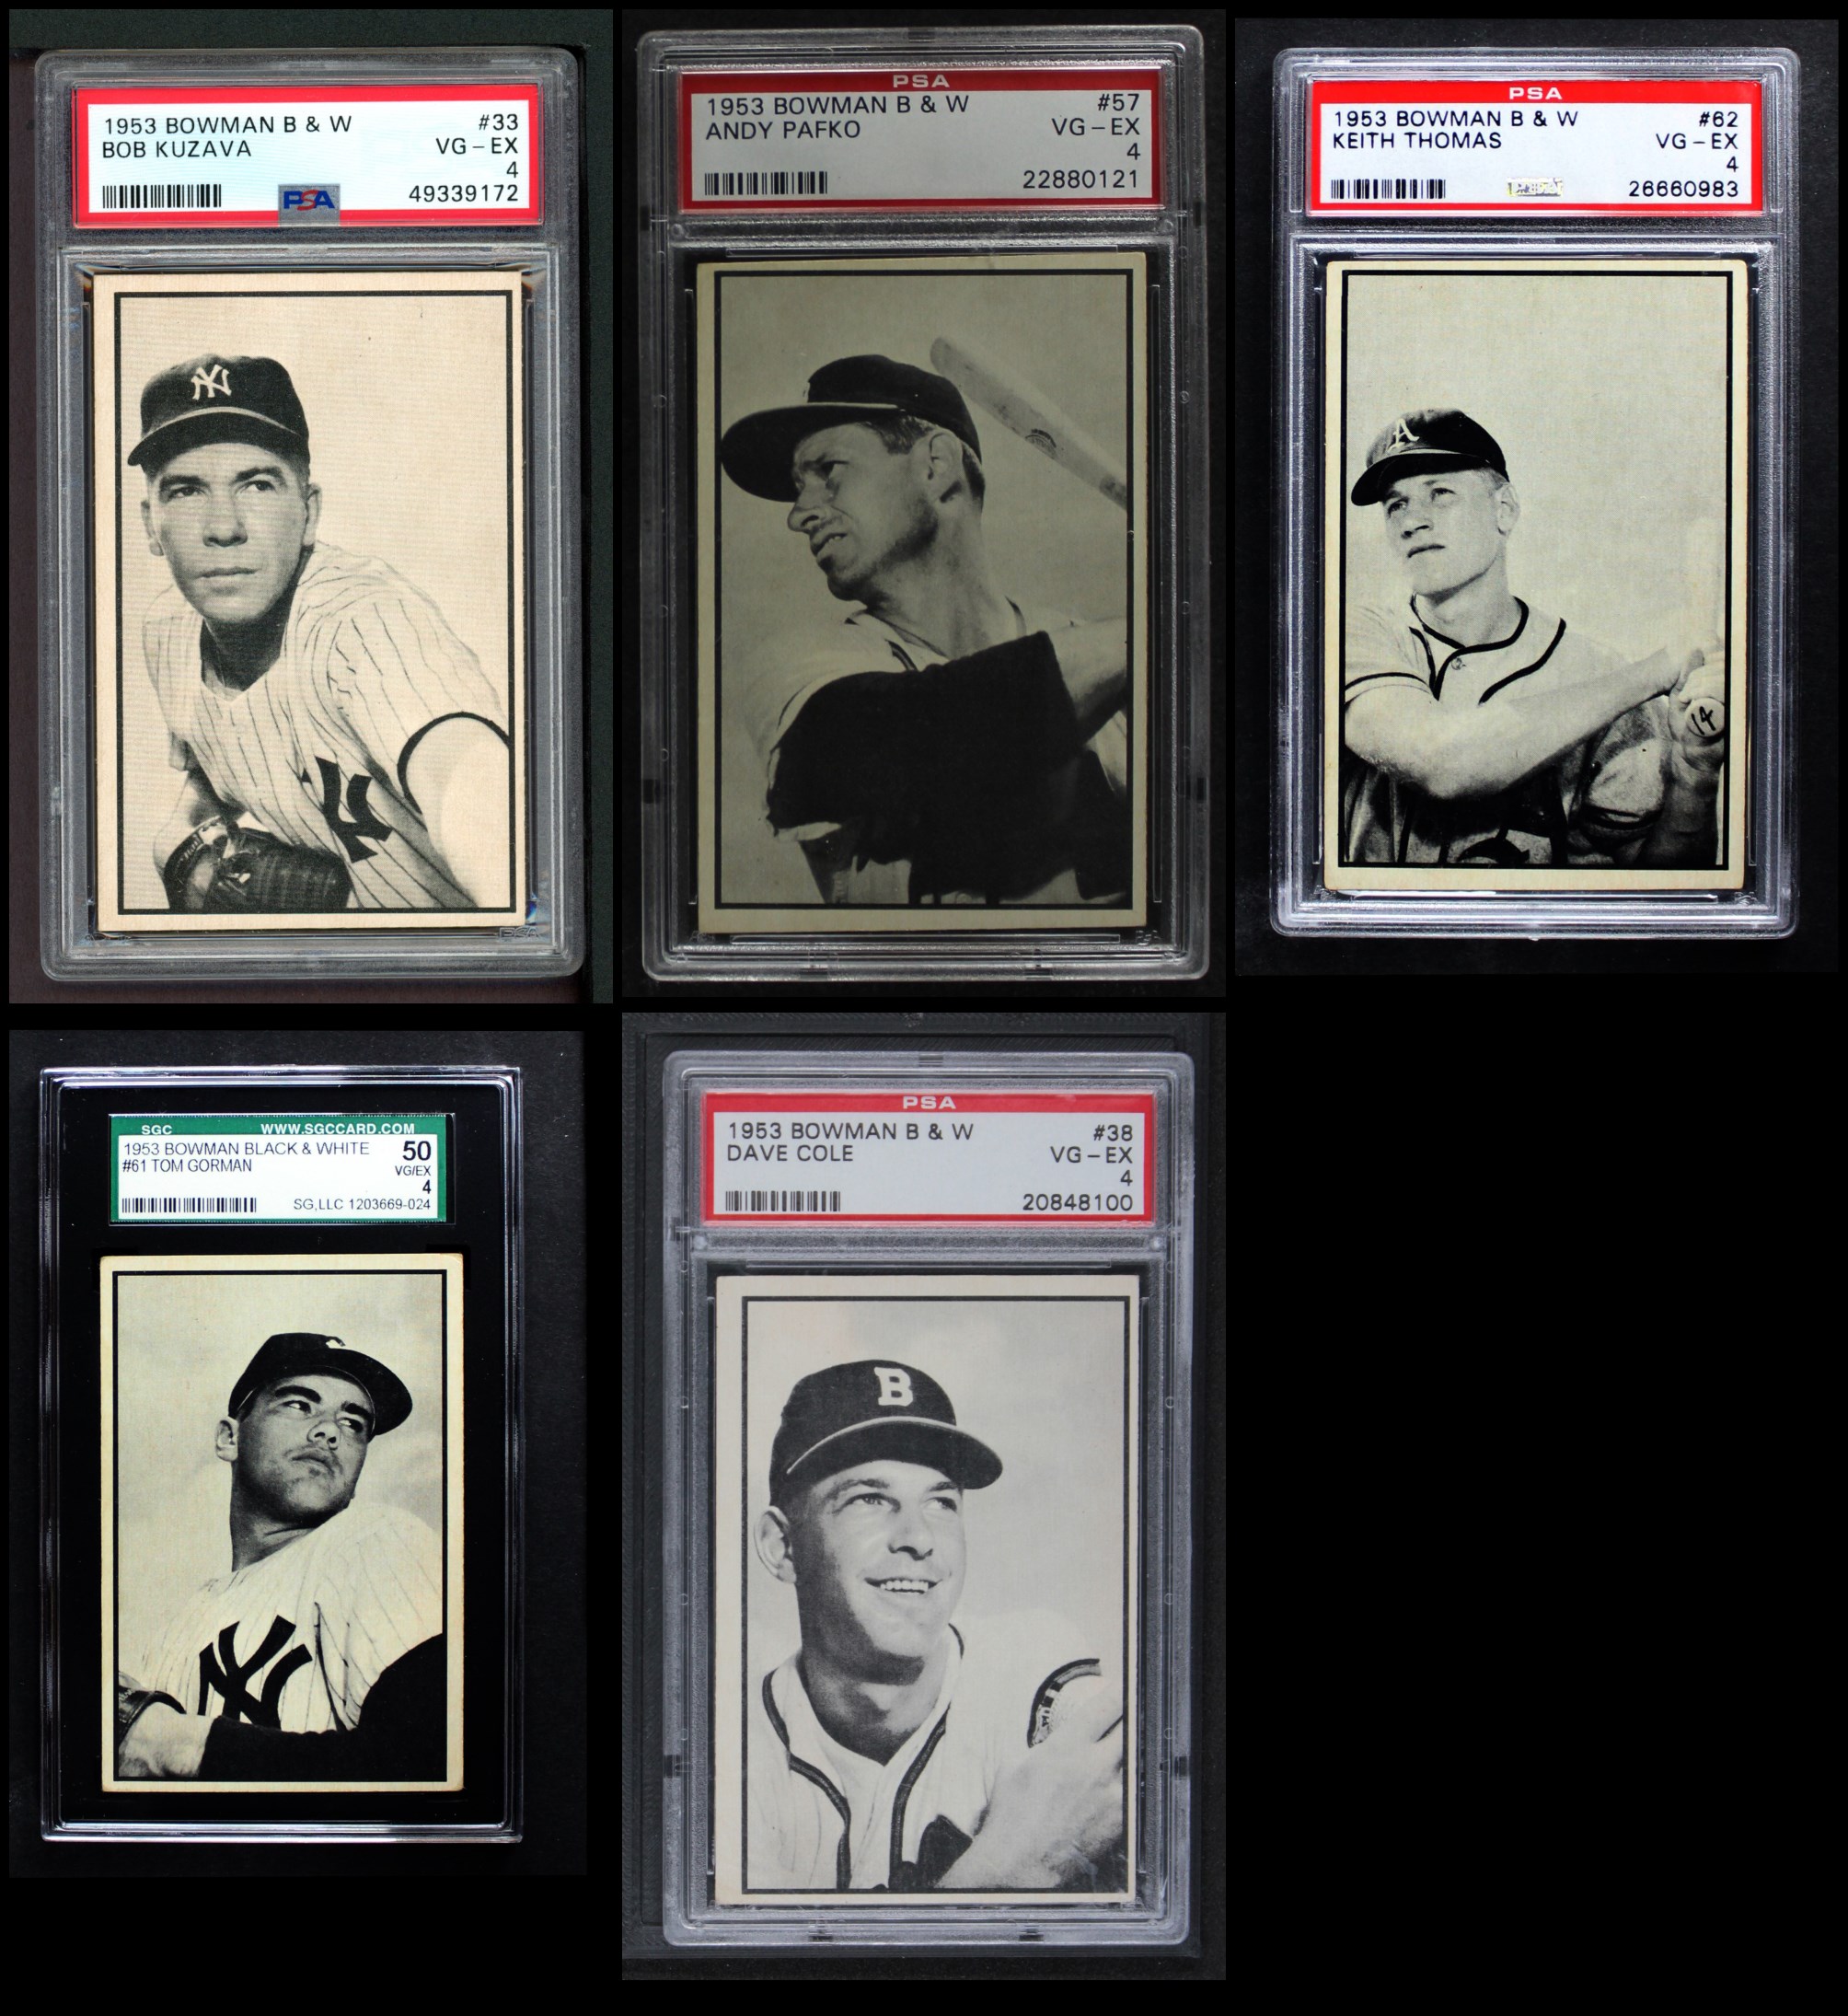 1953 Bowman B & W Baseball Complete Set 3.5 - VG+ for sale online